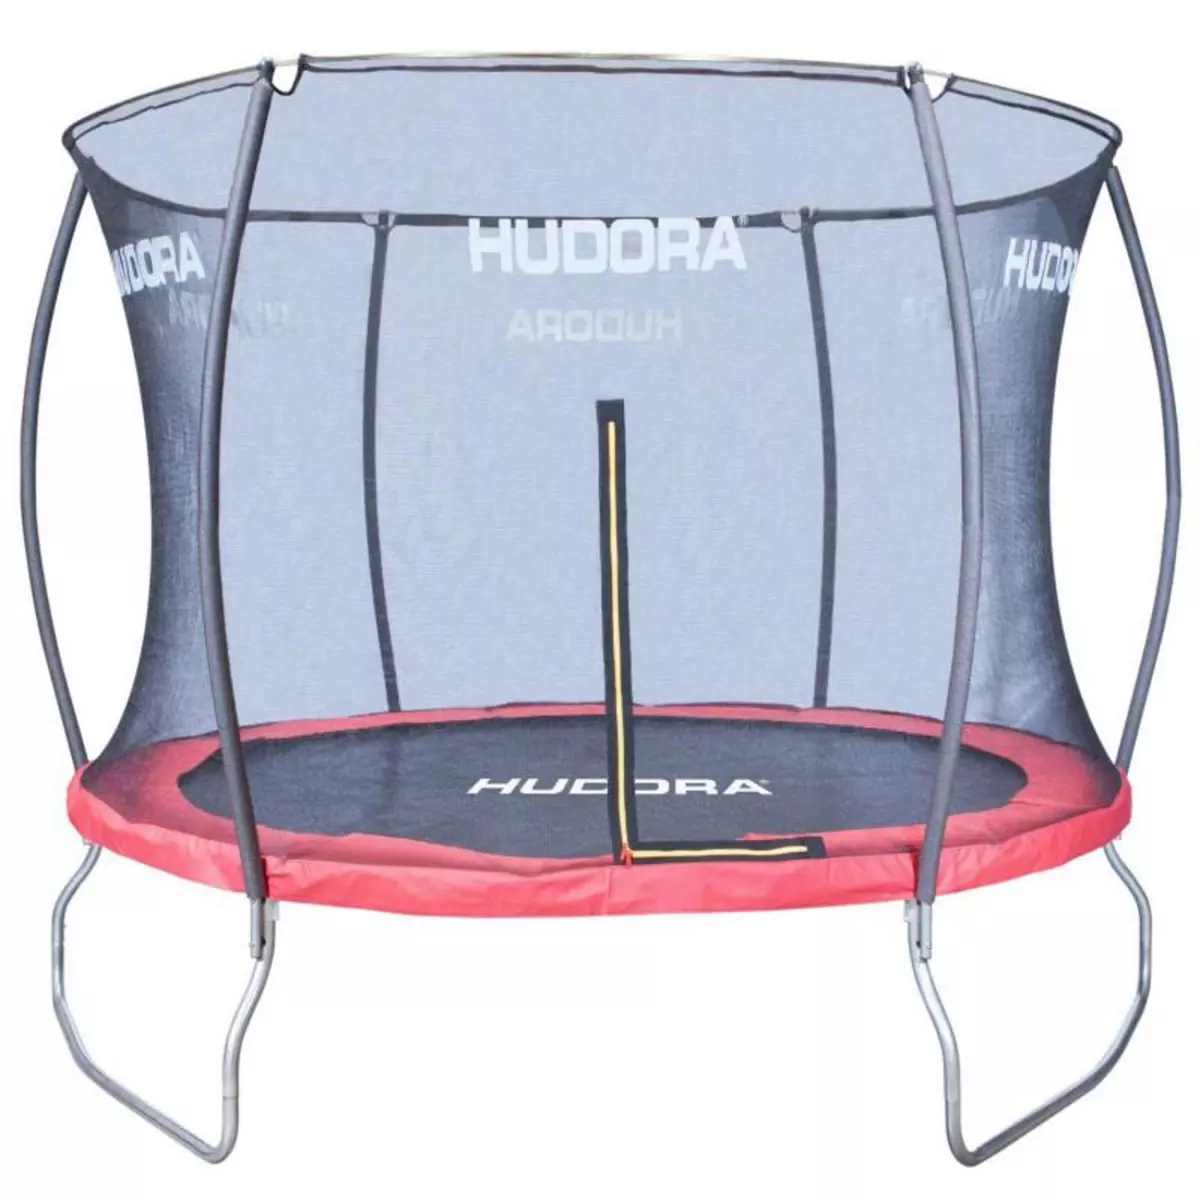 HUDORA Hudora Fantastic Trampoline 300V with Net